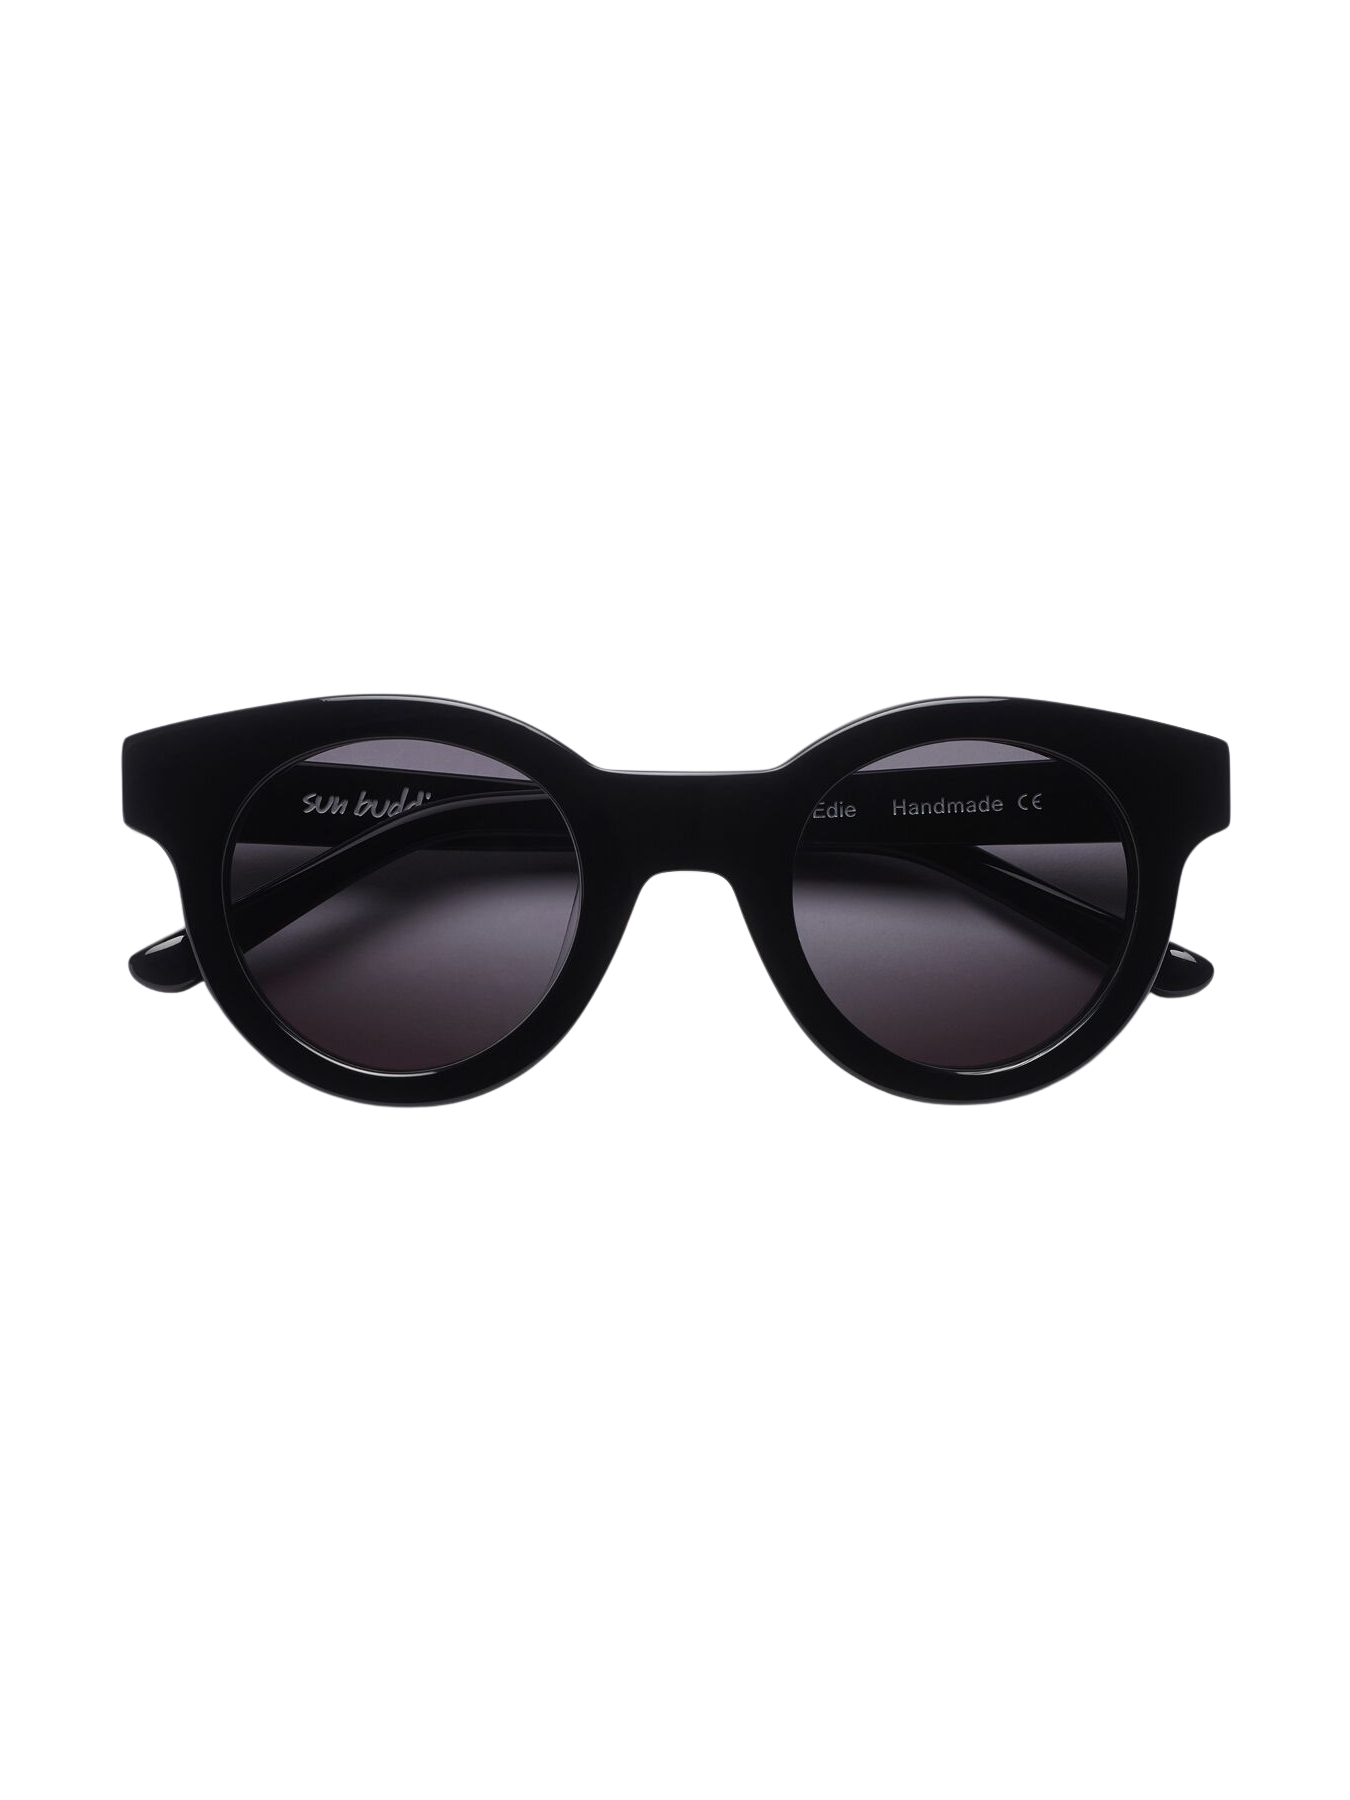 Sun Buddies Edie Sunglasses in Black